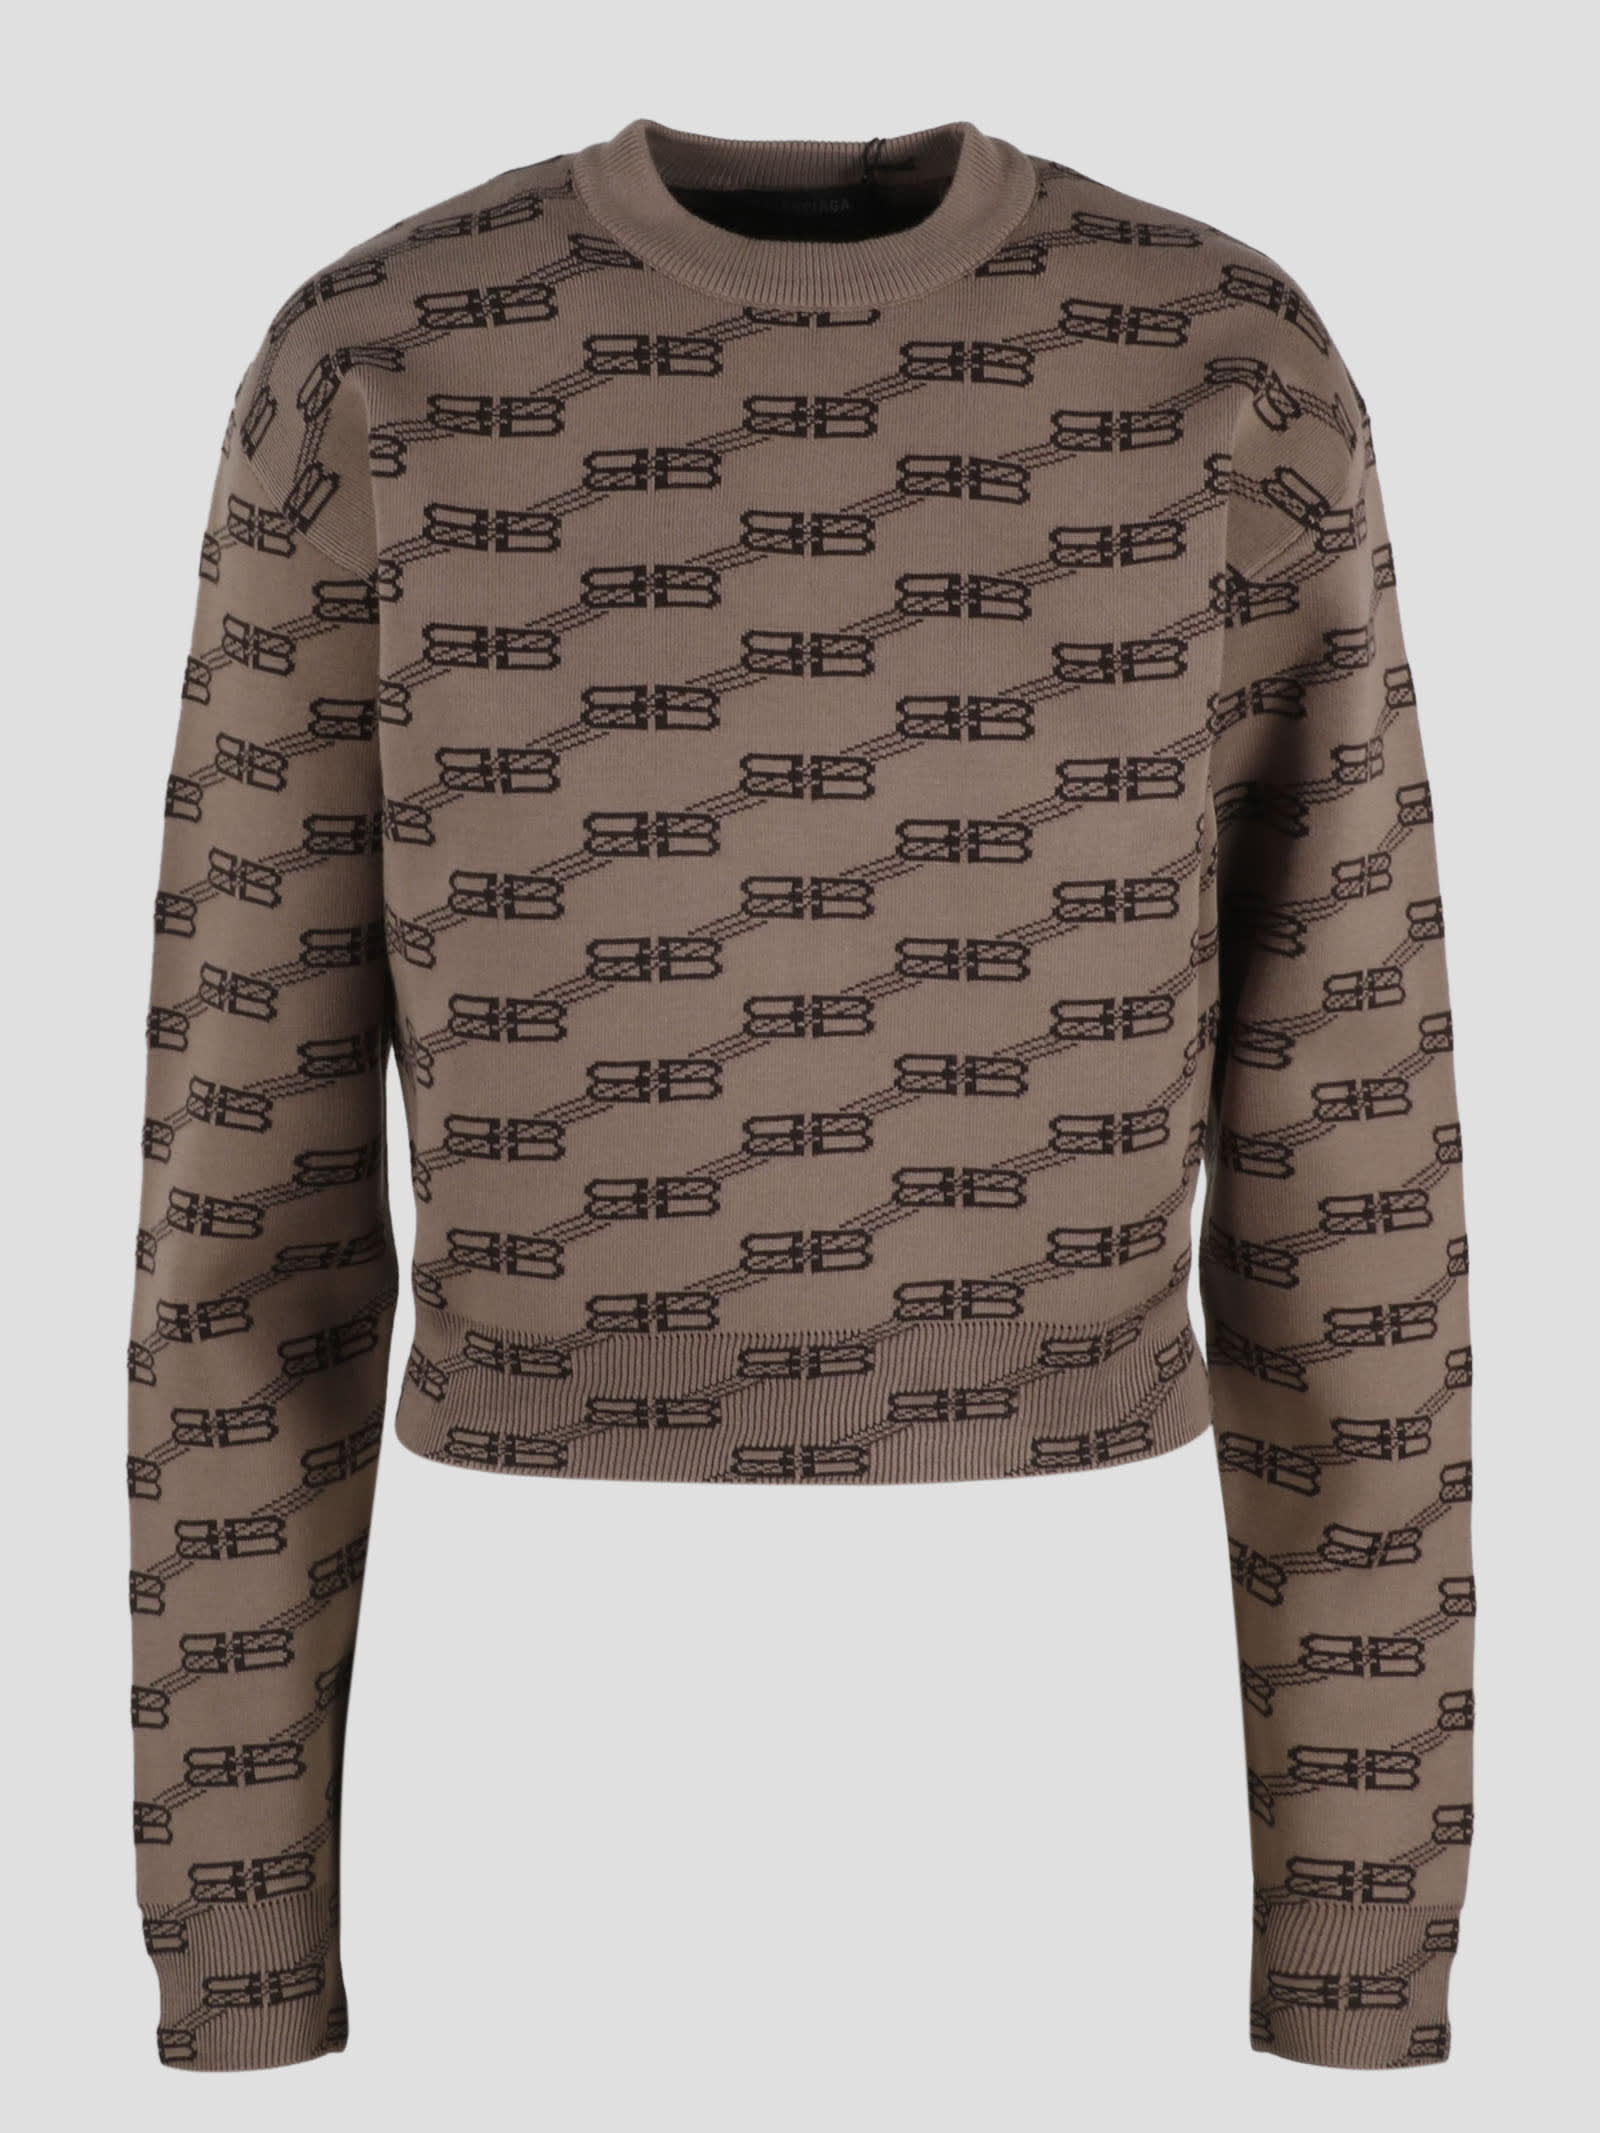 Balenciaga Men's BB Monogram Sweater